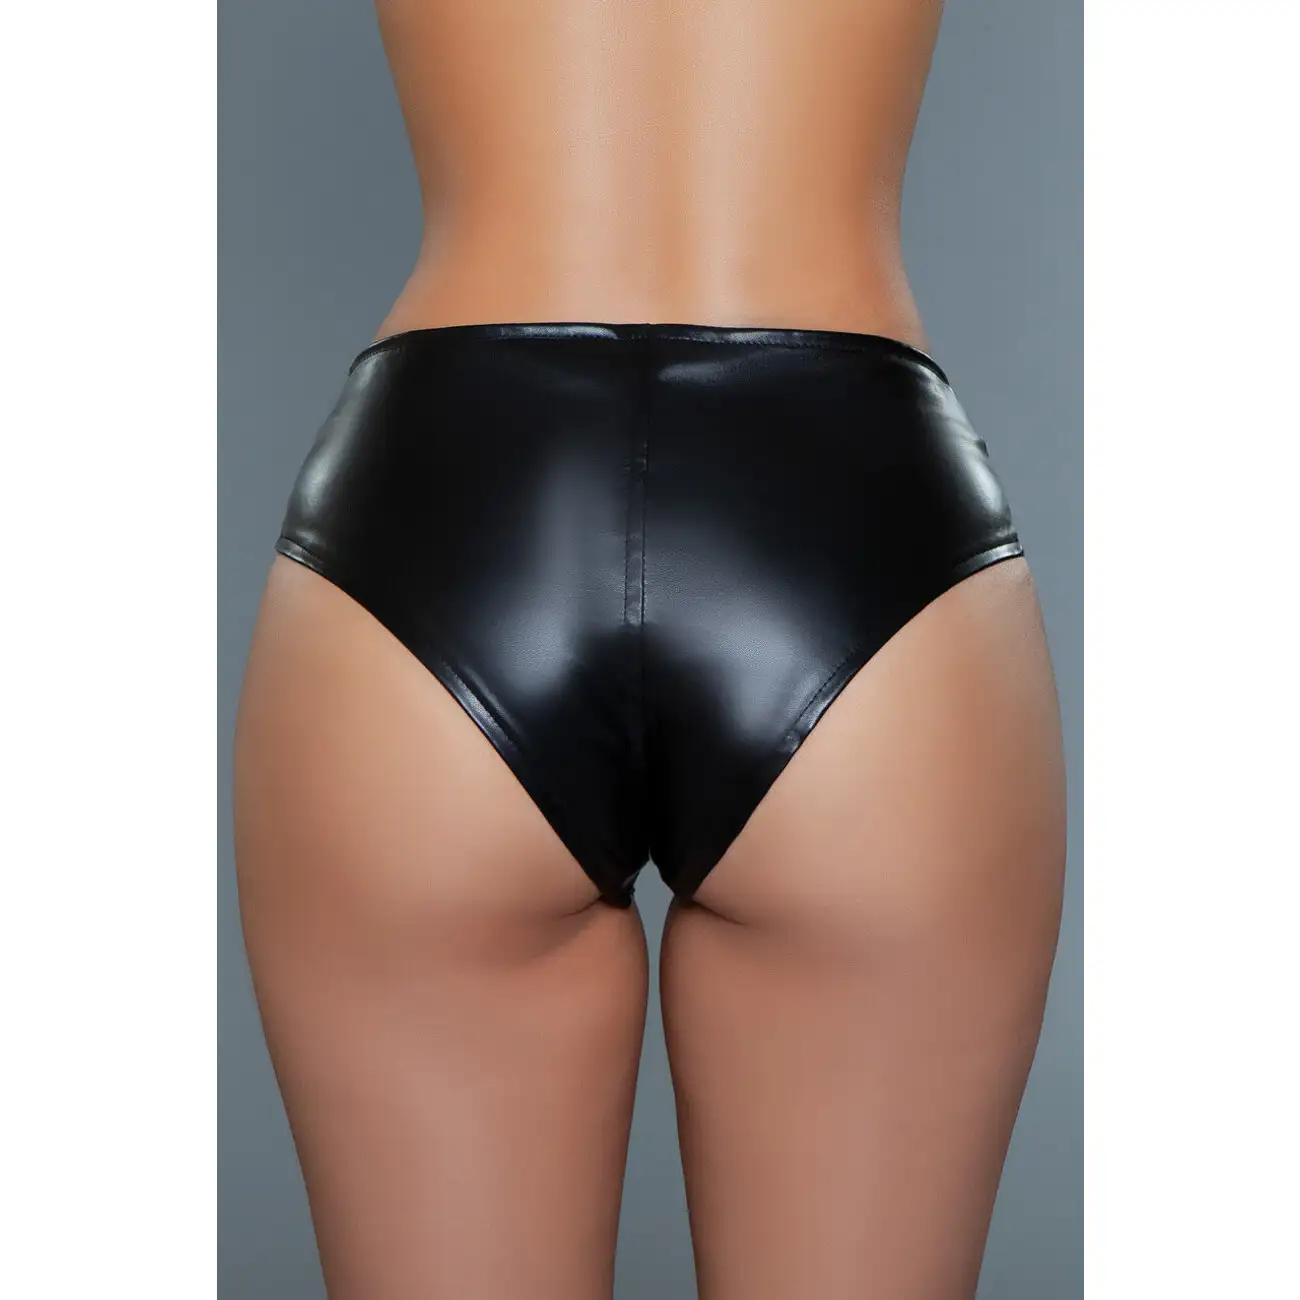 Women's Low Rise Black PU Leather Cheeky Shorts front zipper design